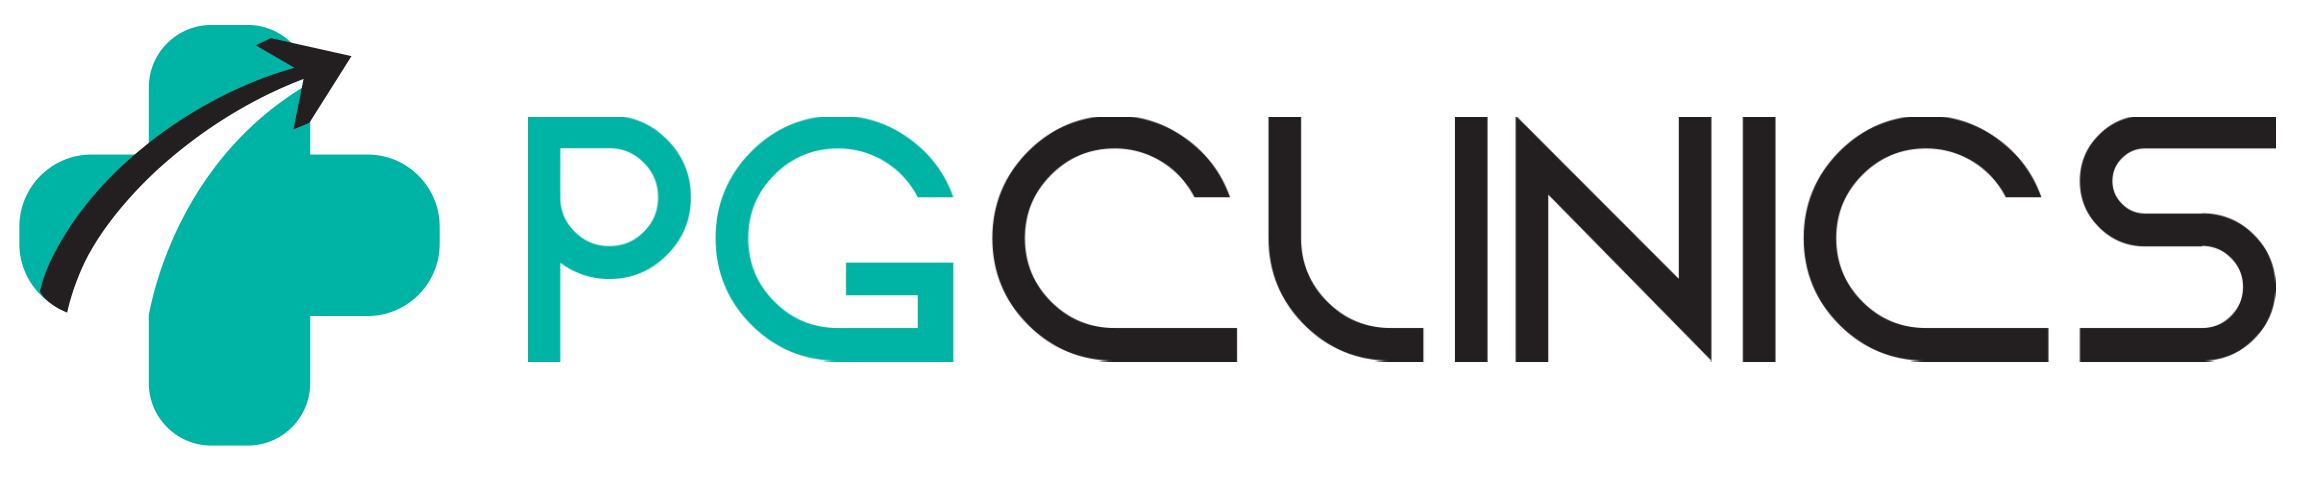 PG Clinics logo